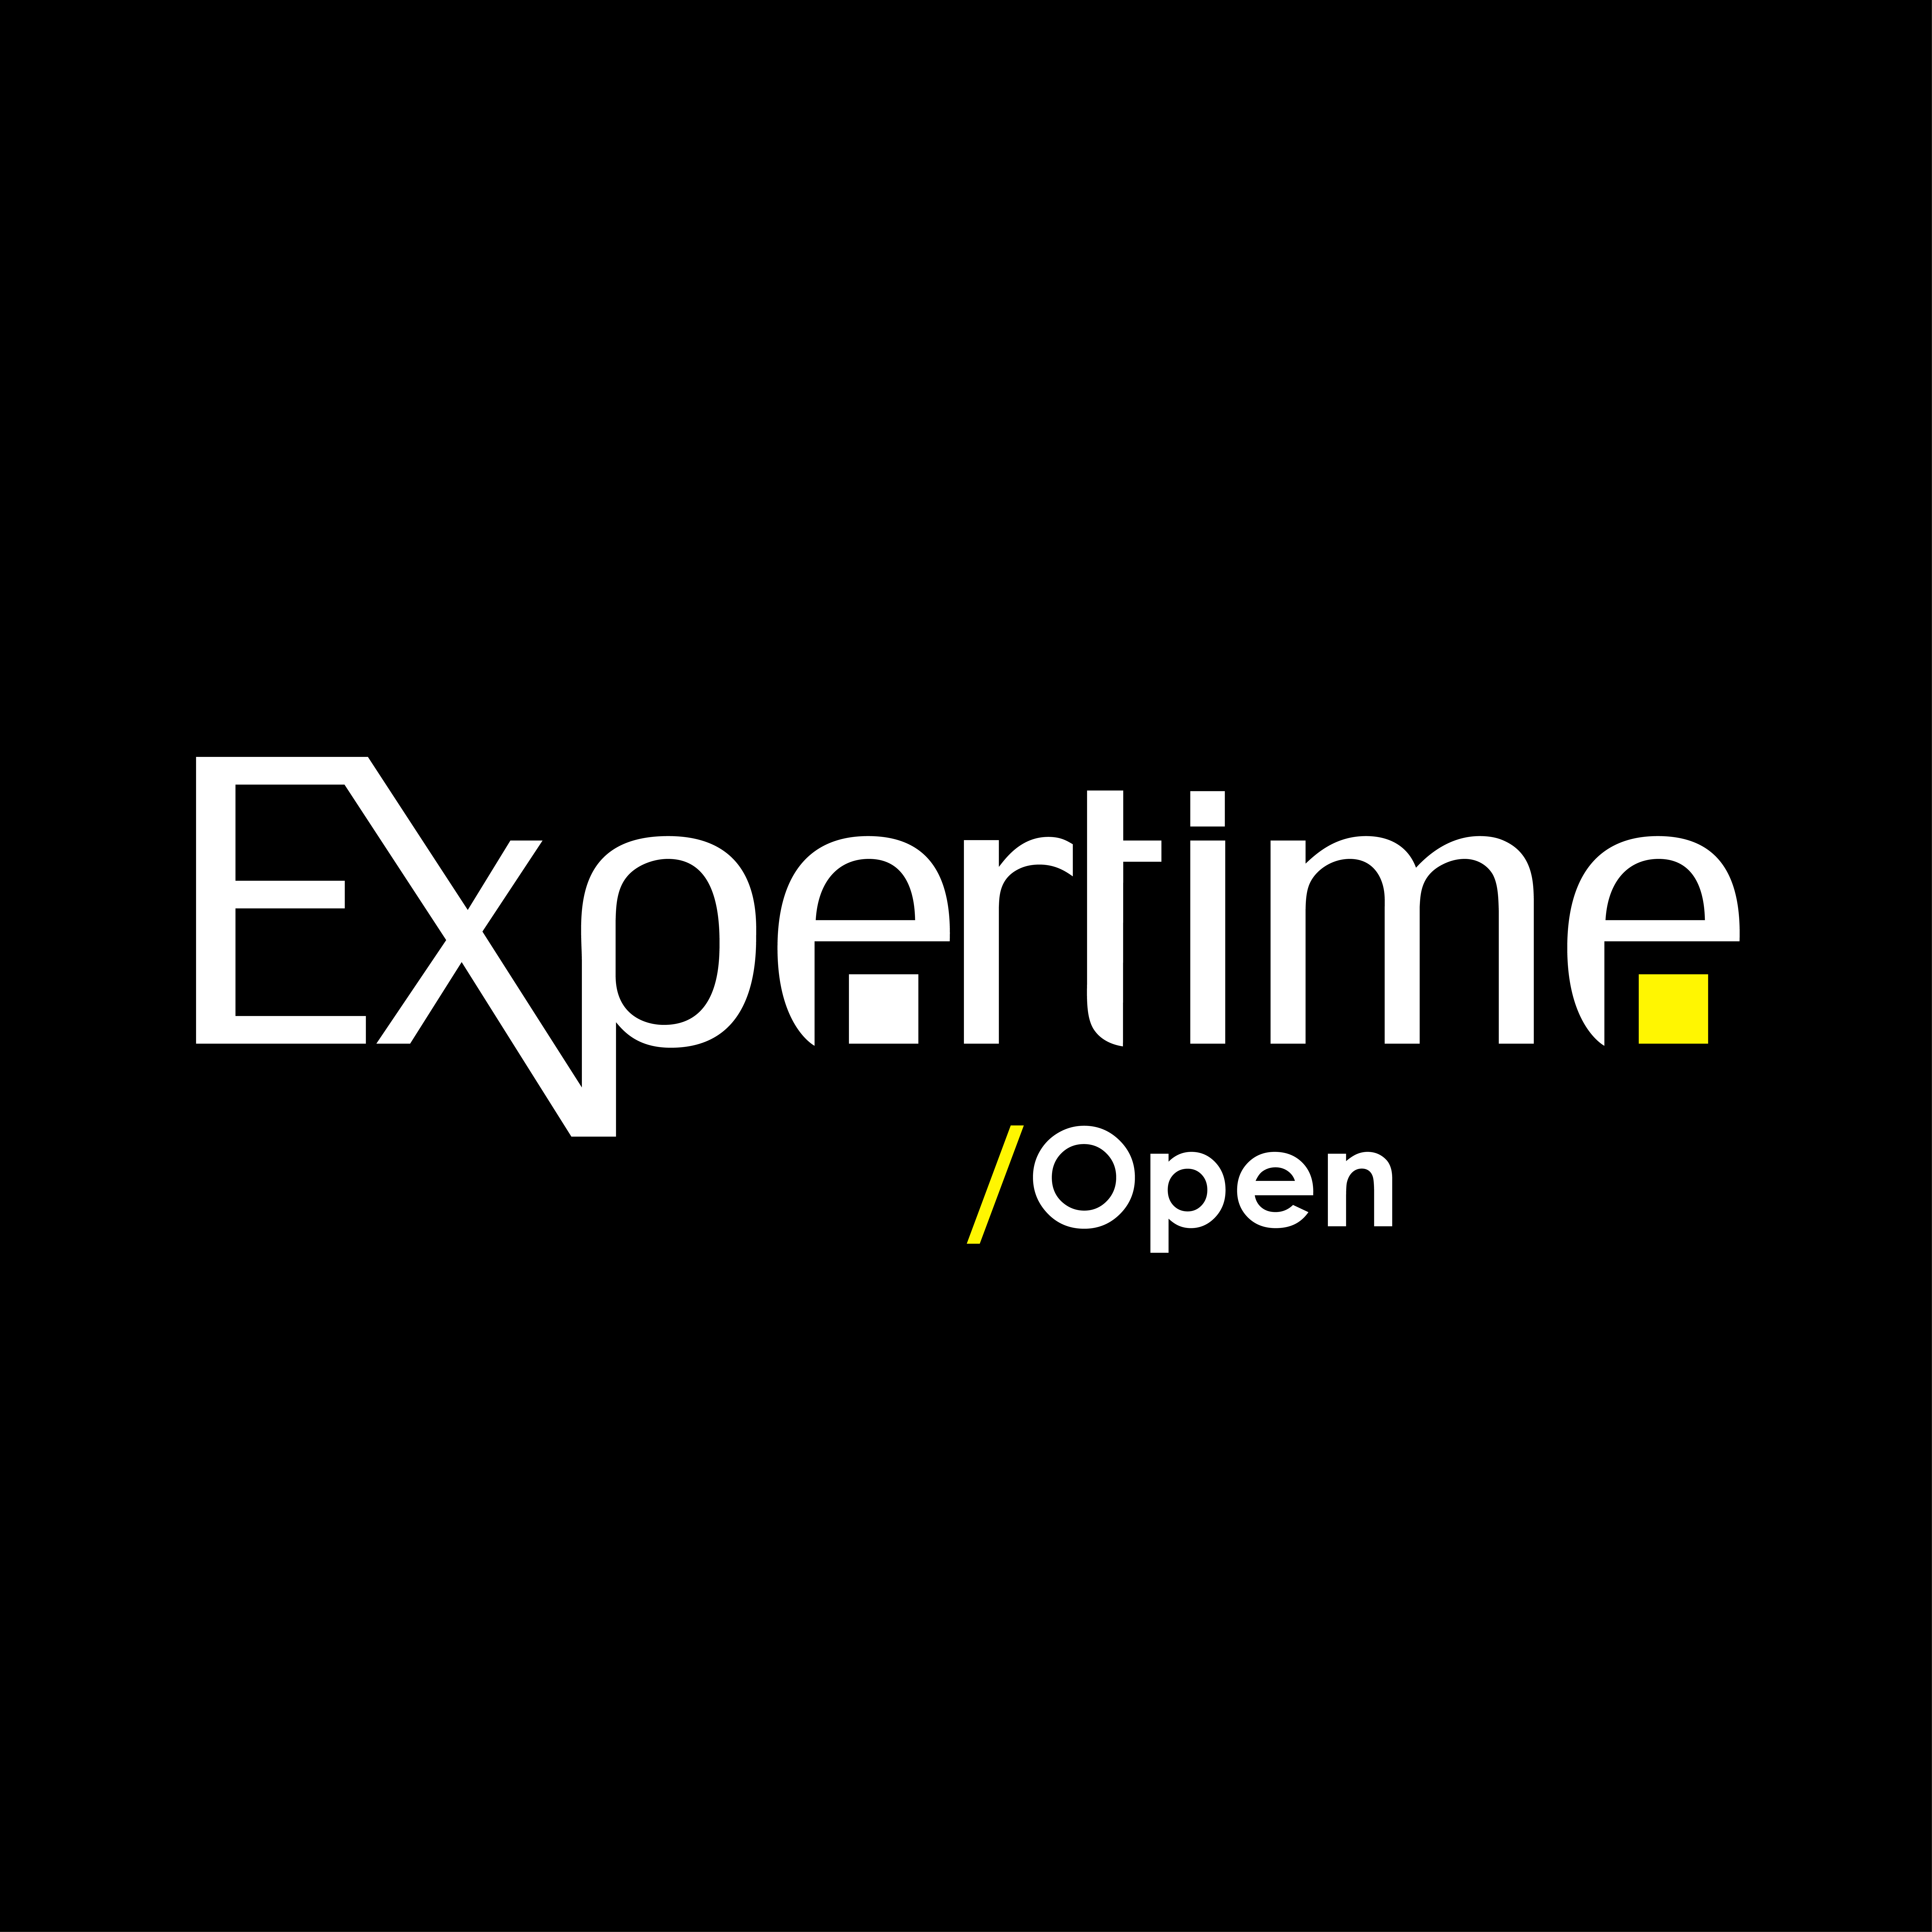 Expertime /Open